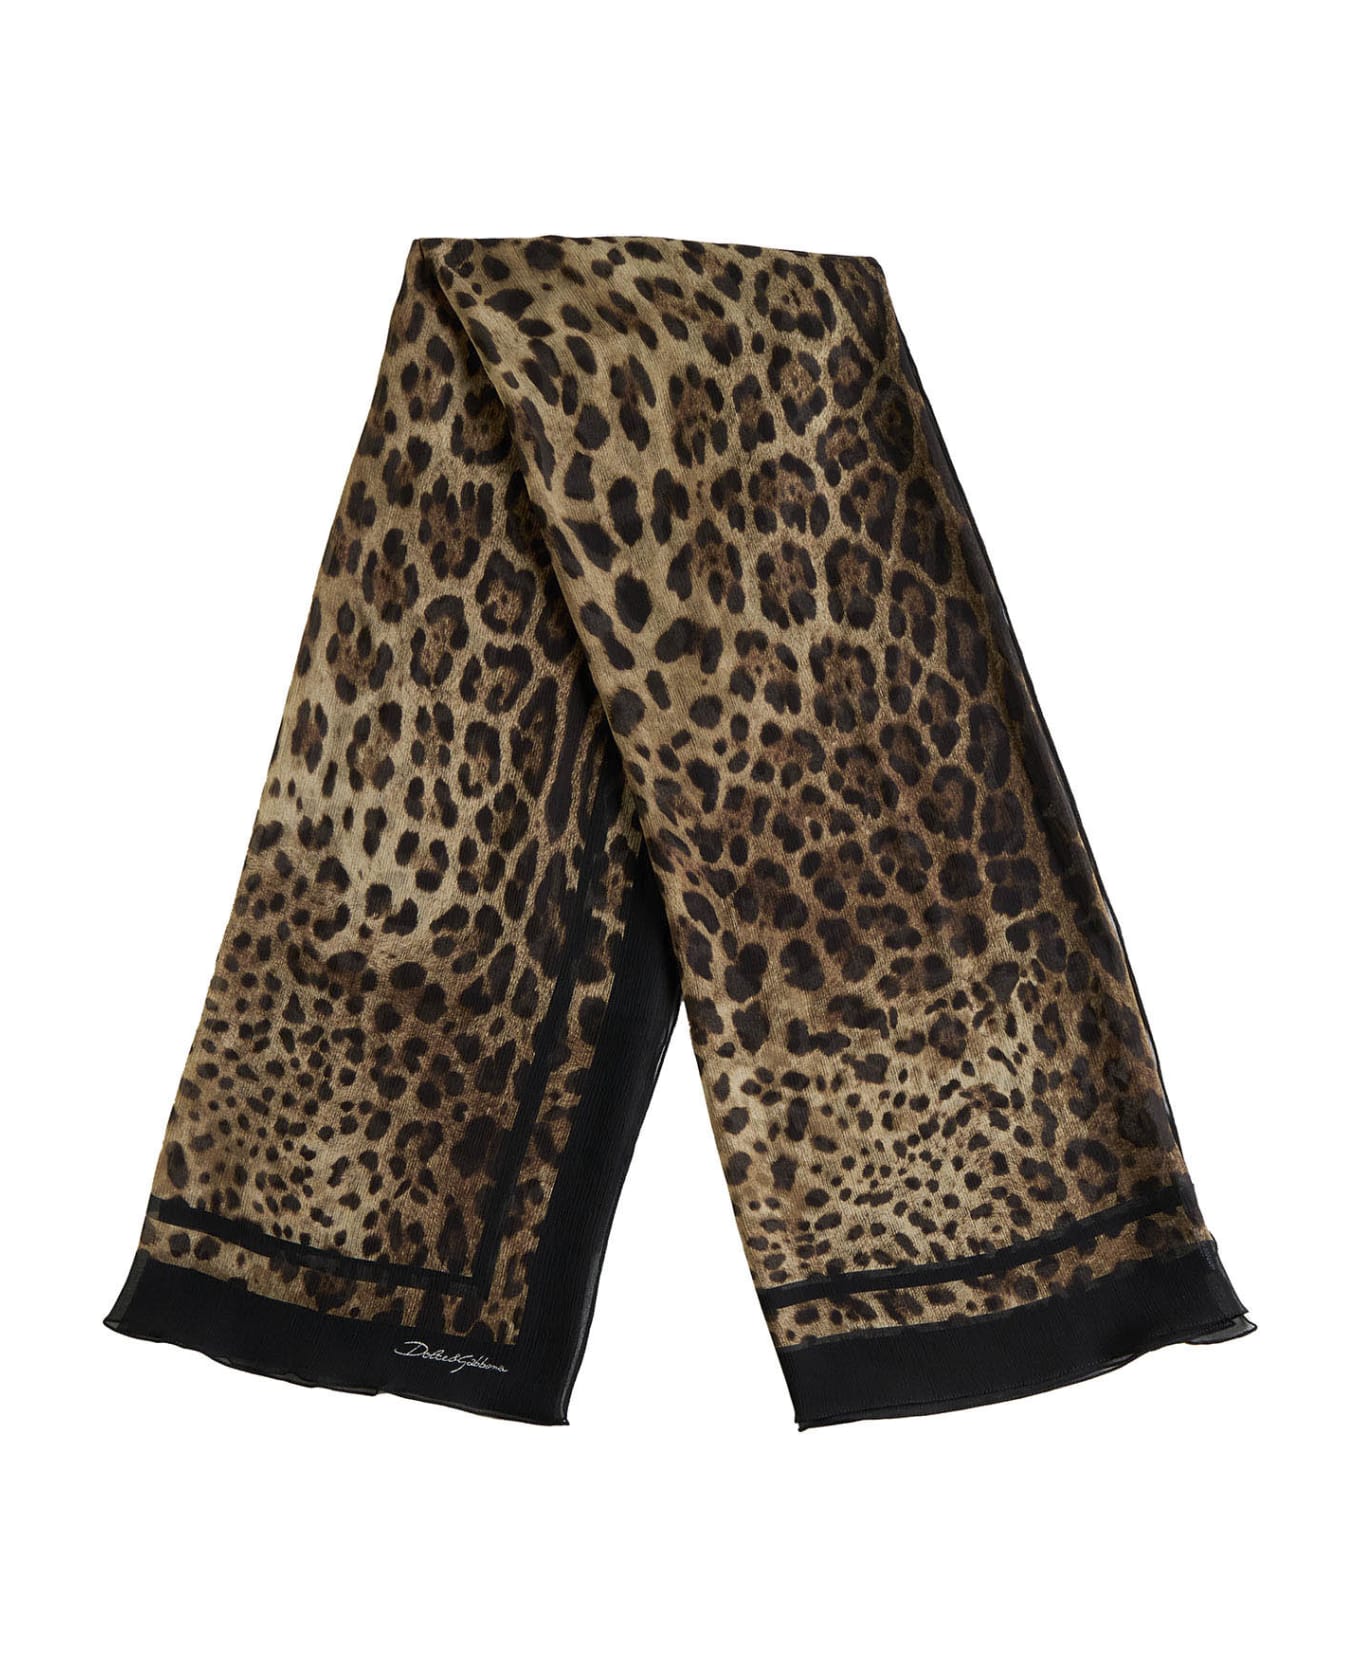 Dolce stripe & Gabbana 'leopard' Scarf - Dolce stripe & Gabbana crystal-embellished fringed top